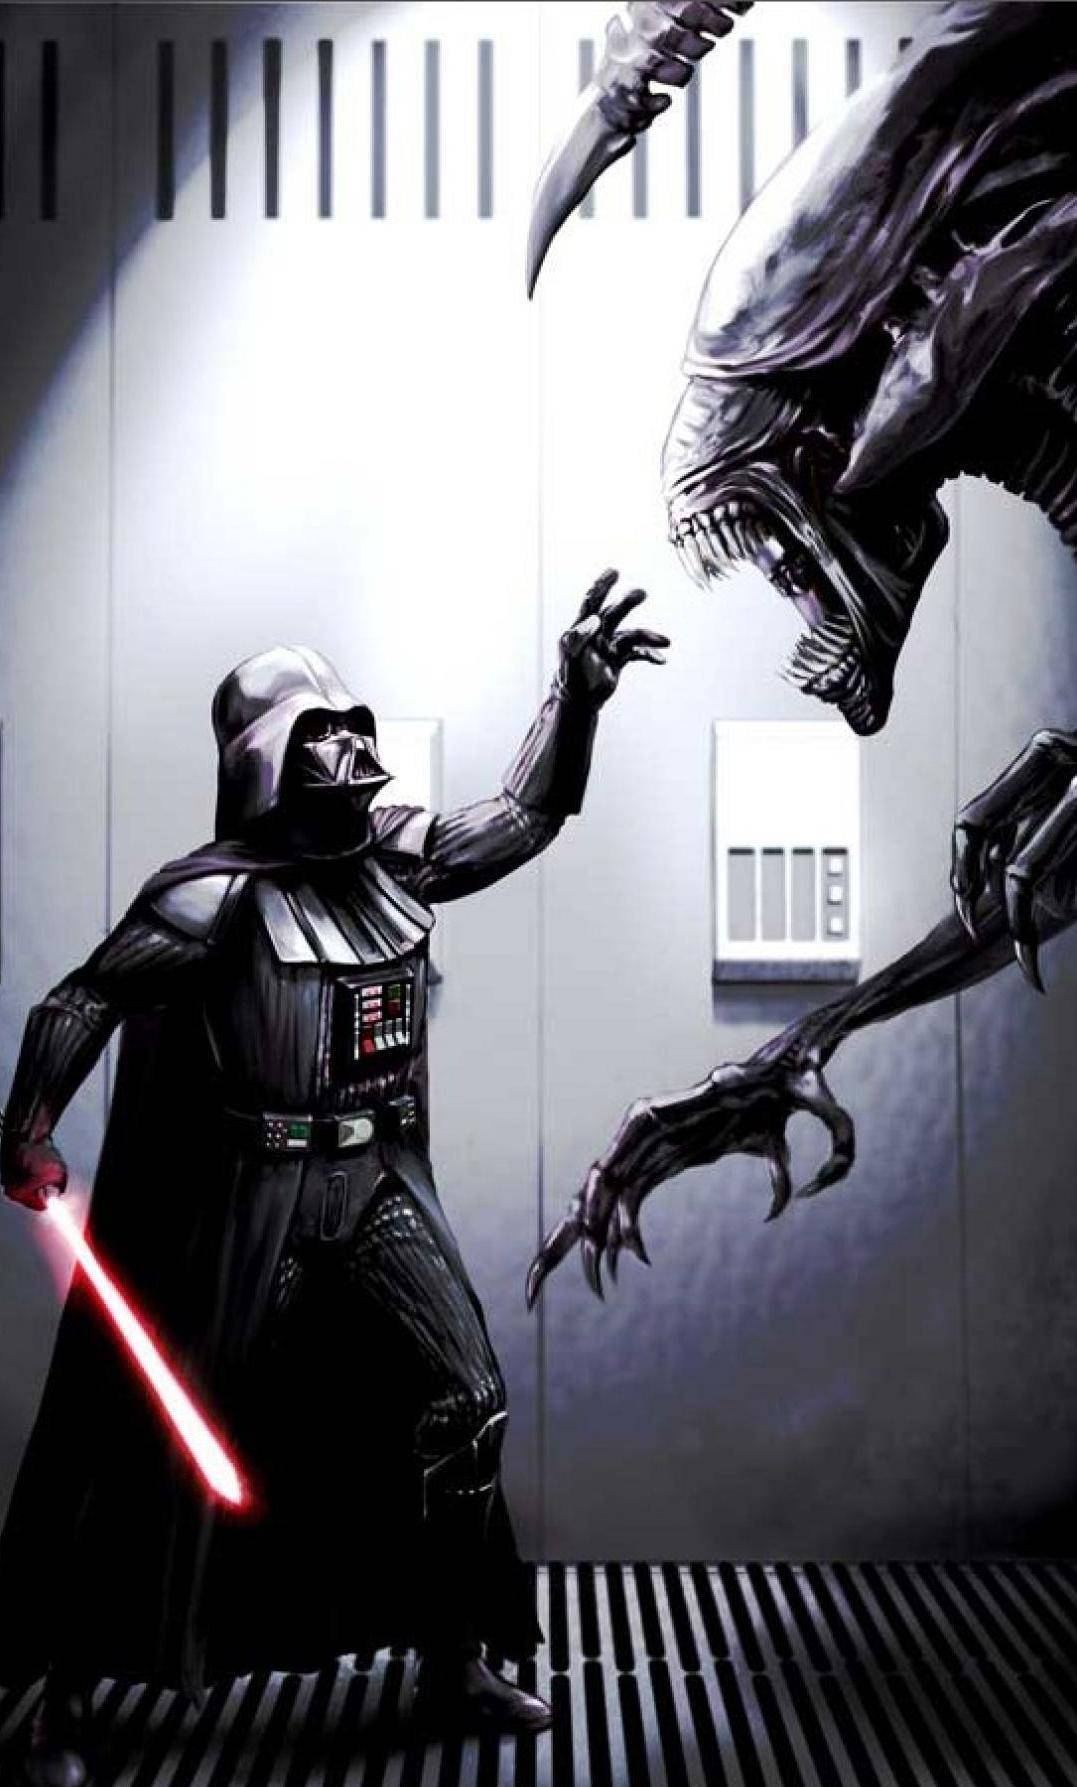 Alien Versus Darth Vader From Star Wars Cell Phone Background